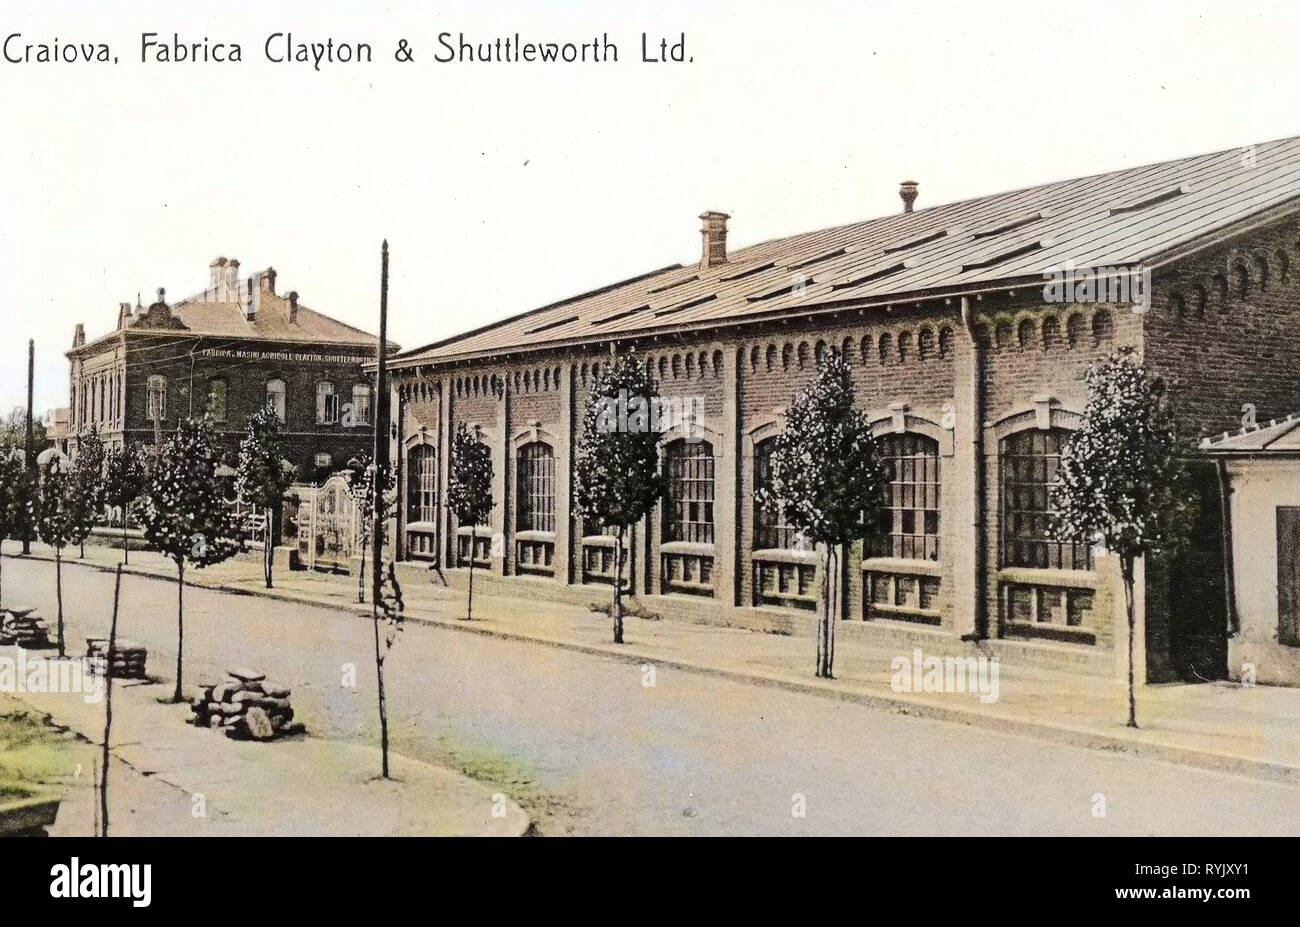 Clayton & Shuttleworth, 1912 postcards, Craiova, 1912, Fabrica Clayton & Shuttleworth Ltd Stock Photo